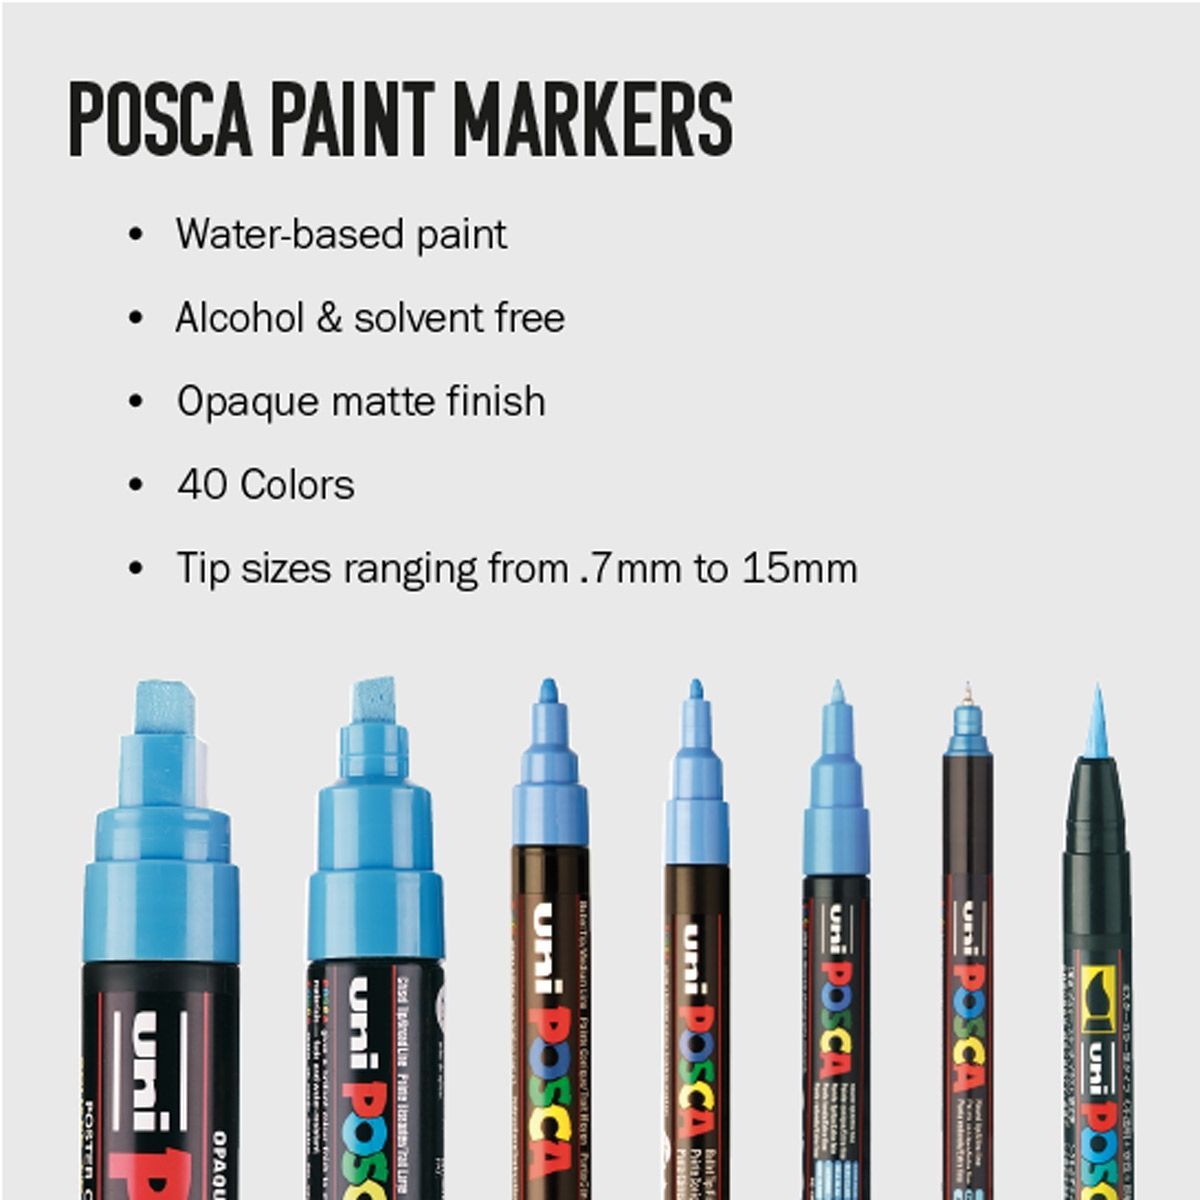 Posca Paint Marker Tips